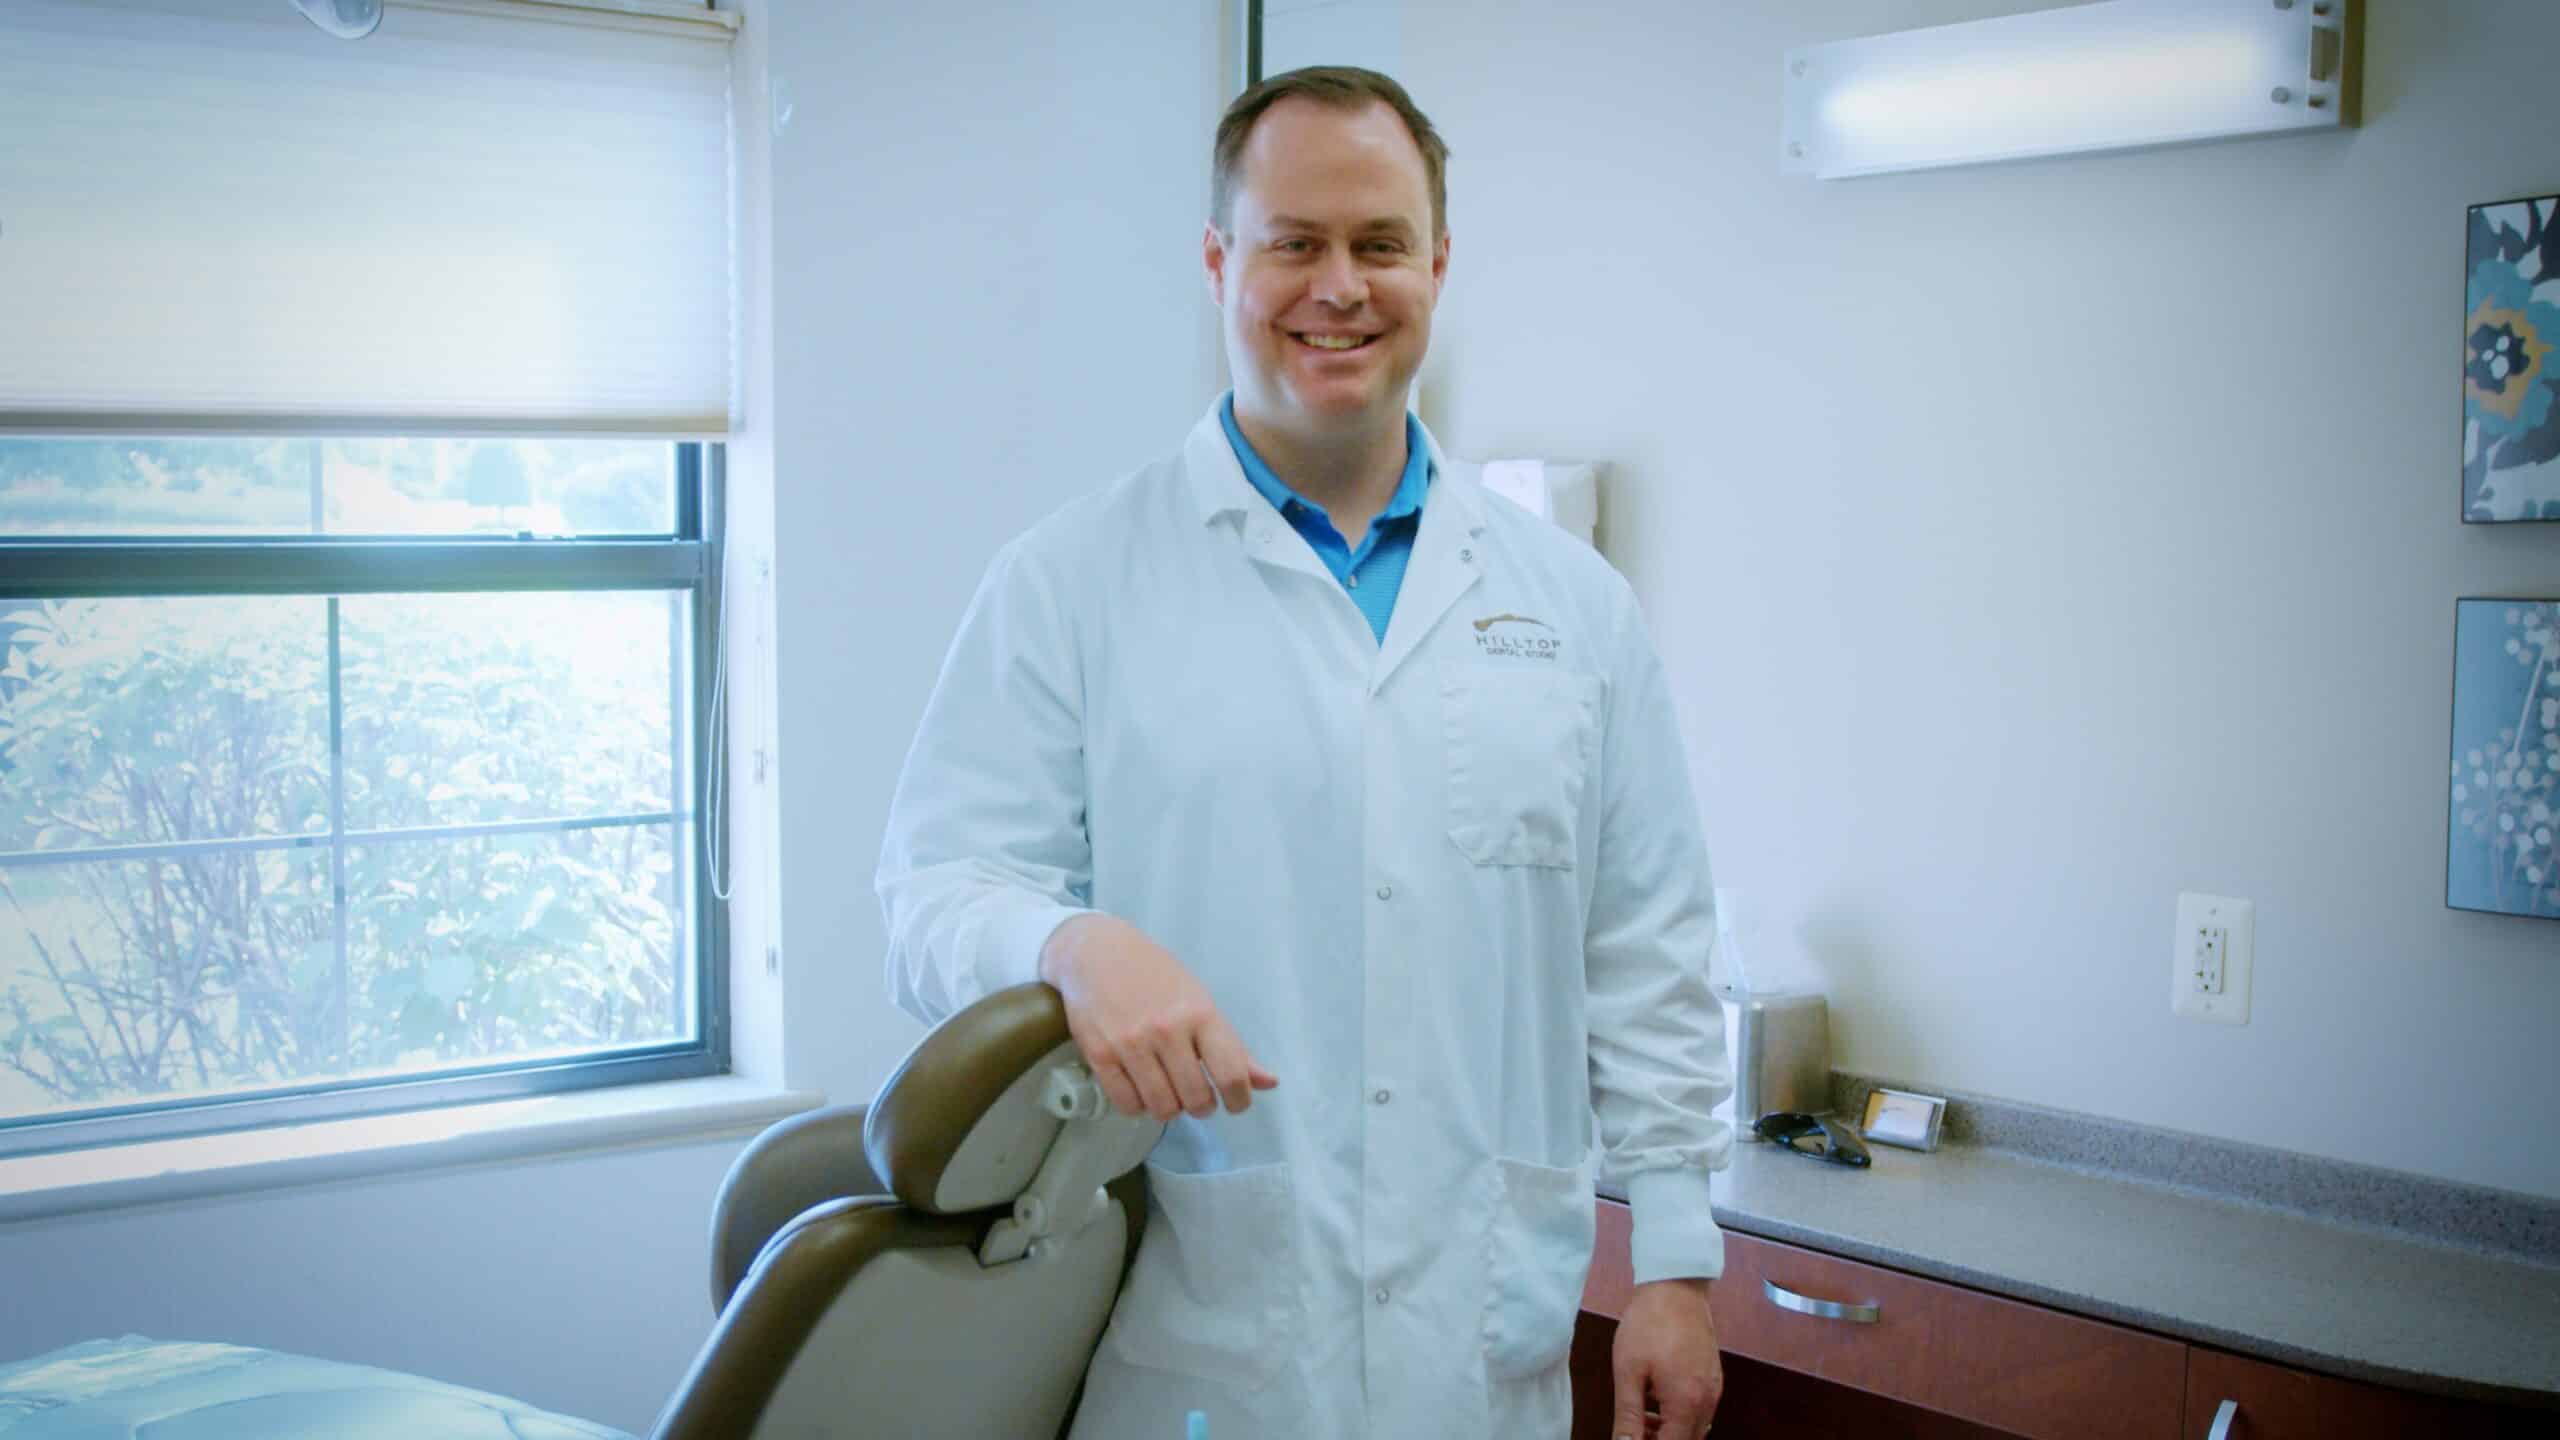 Dr. Haderlie dentist standing in operatory